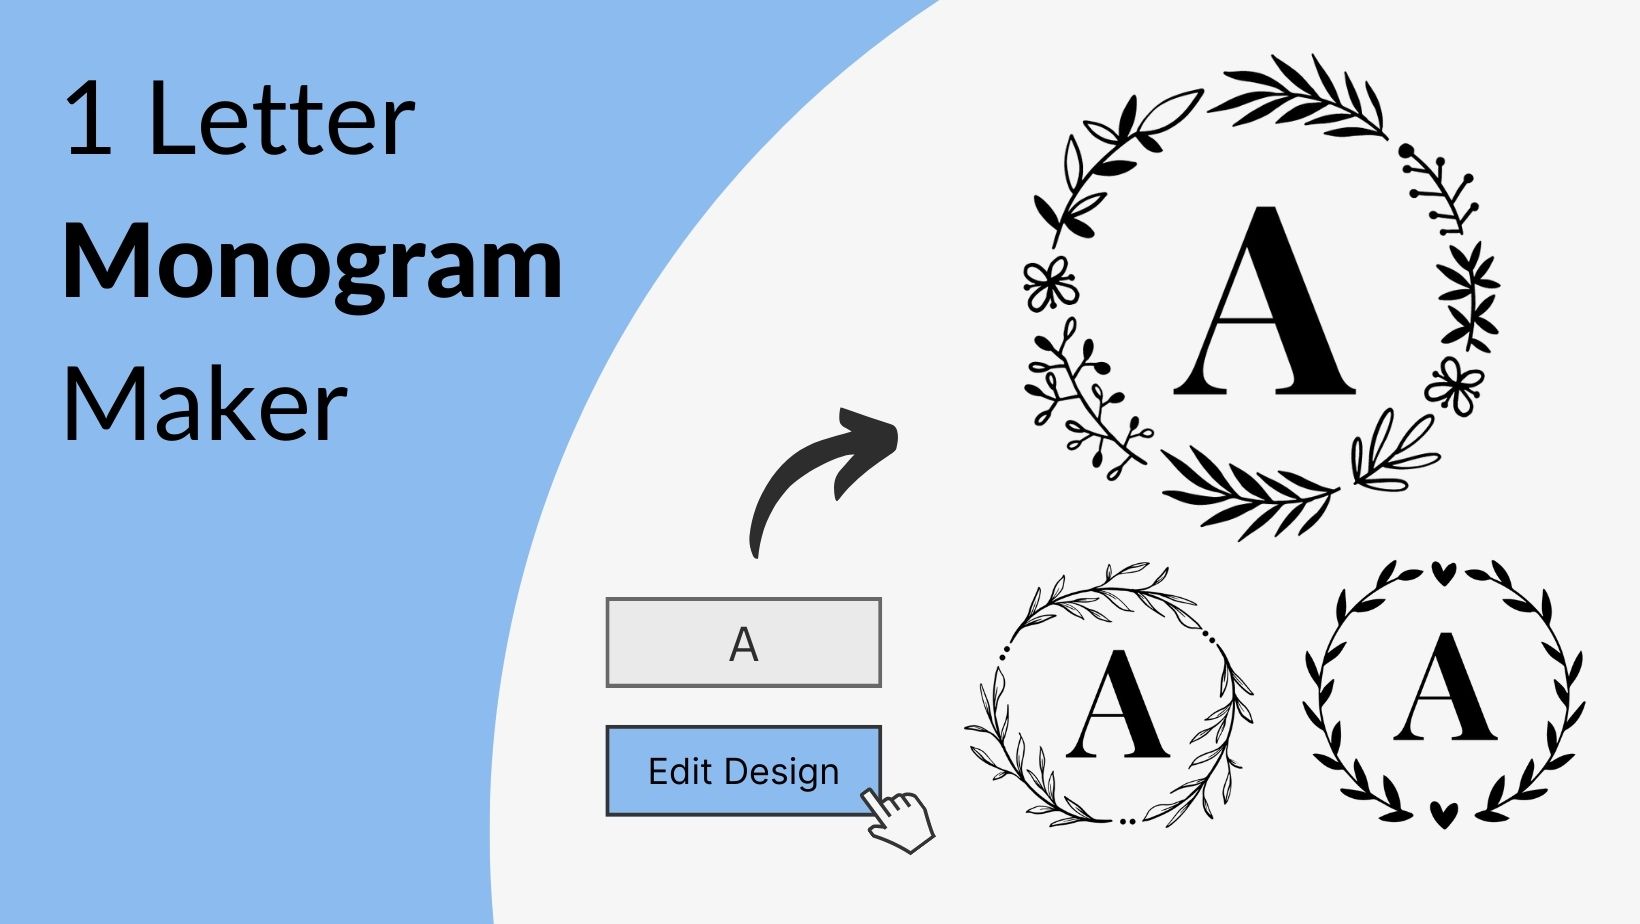 1 letter monogram maker cricut silhouette download free online tool 